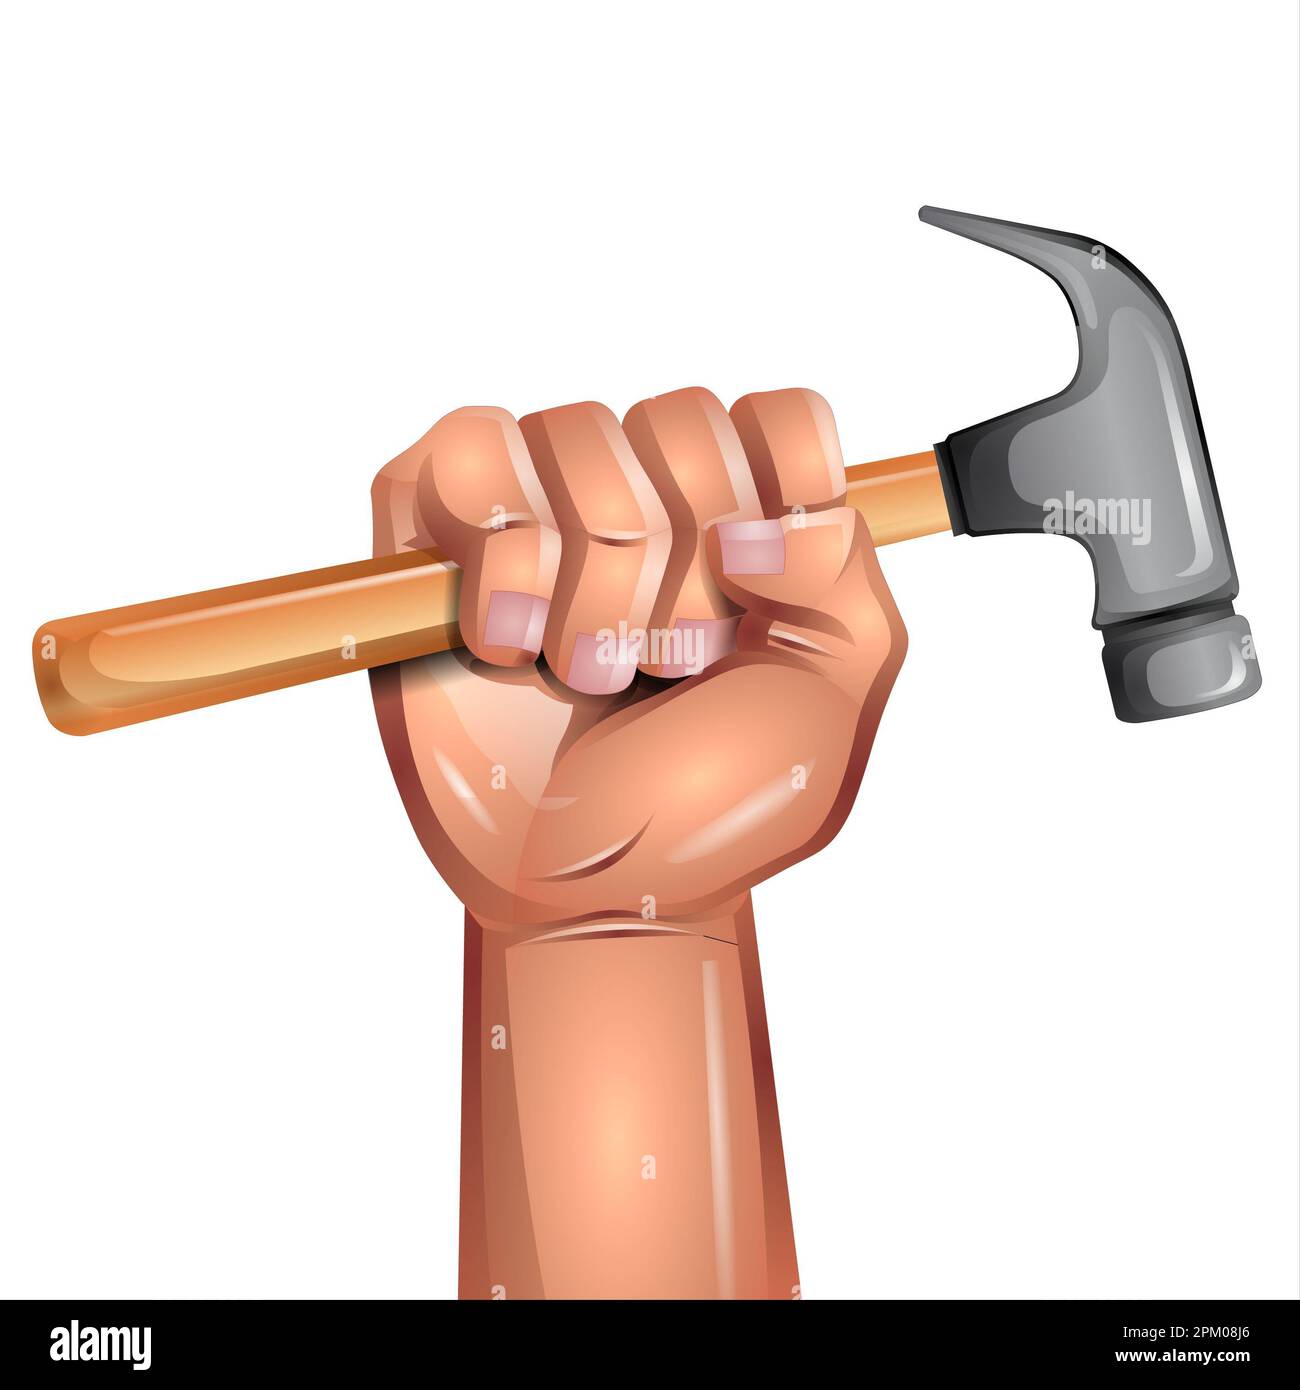 International Labor Day background with human hand holding hammer. Illustration. Stock Photo